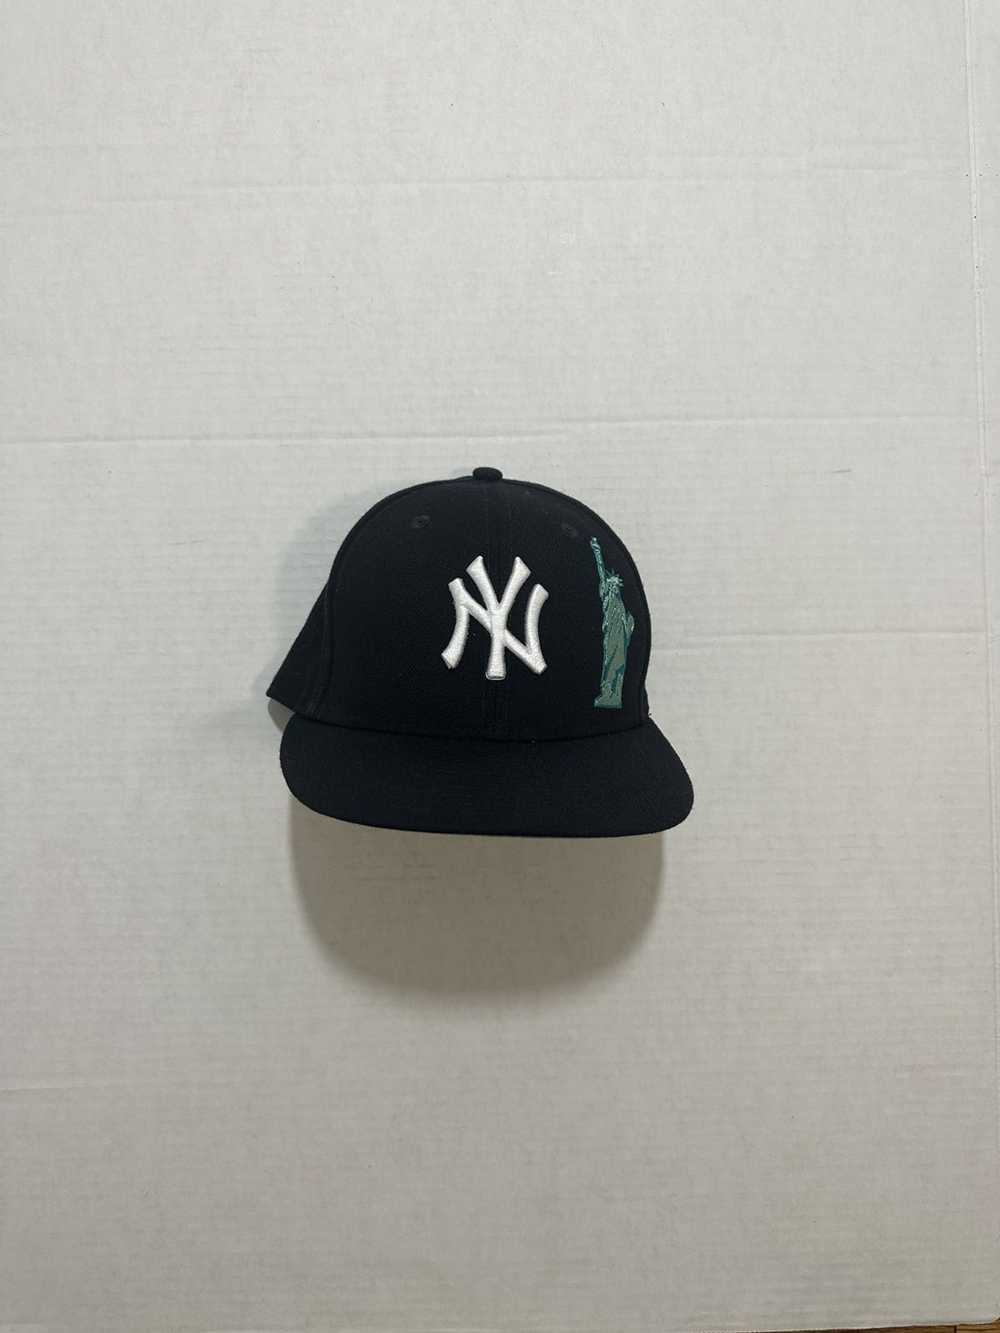 New Era New York Yankees Statue of Liberty hat - image 3